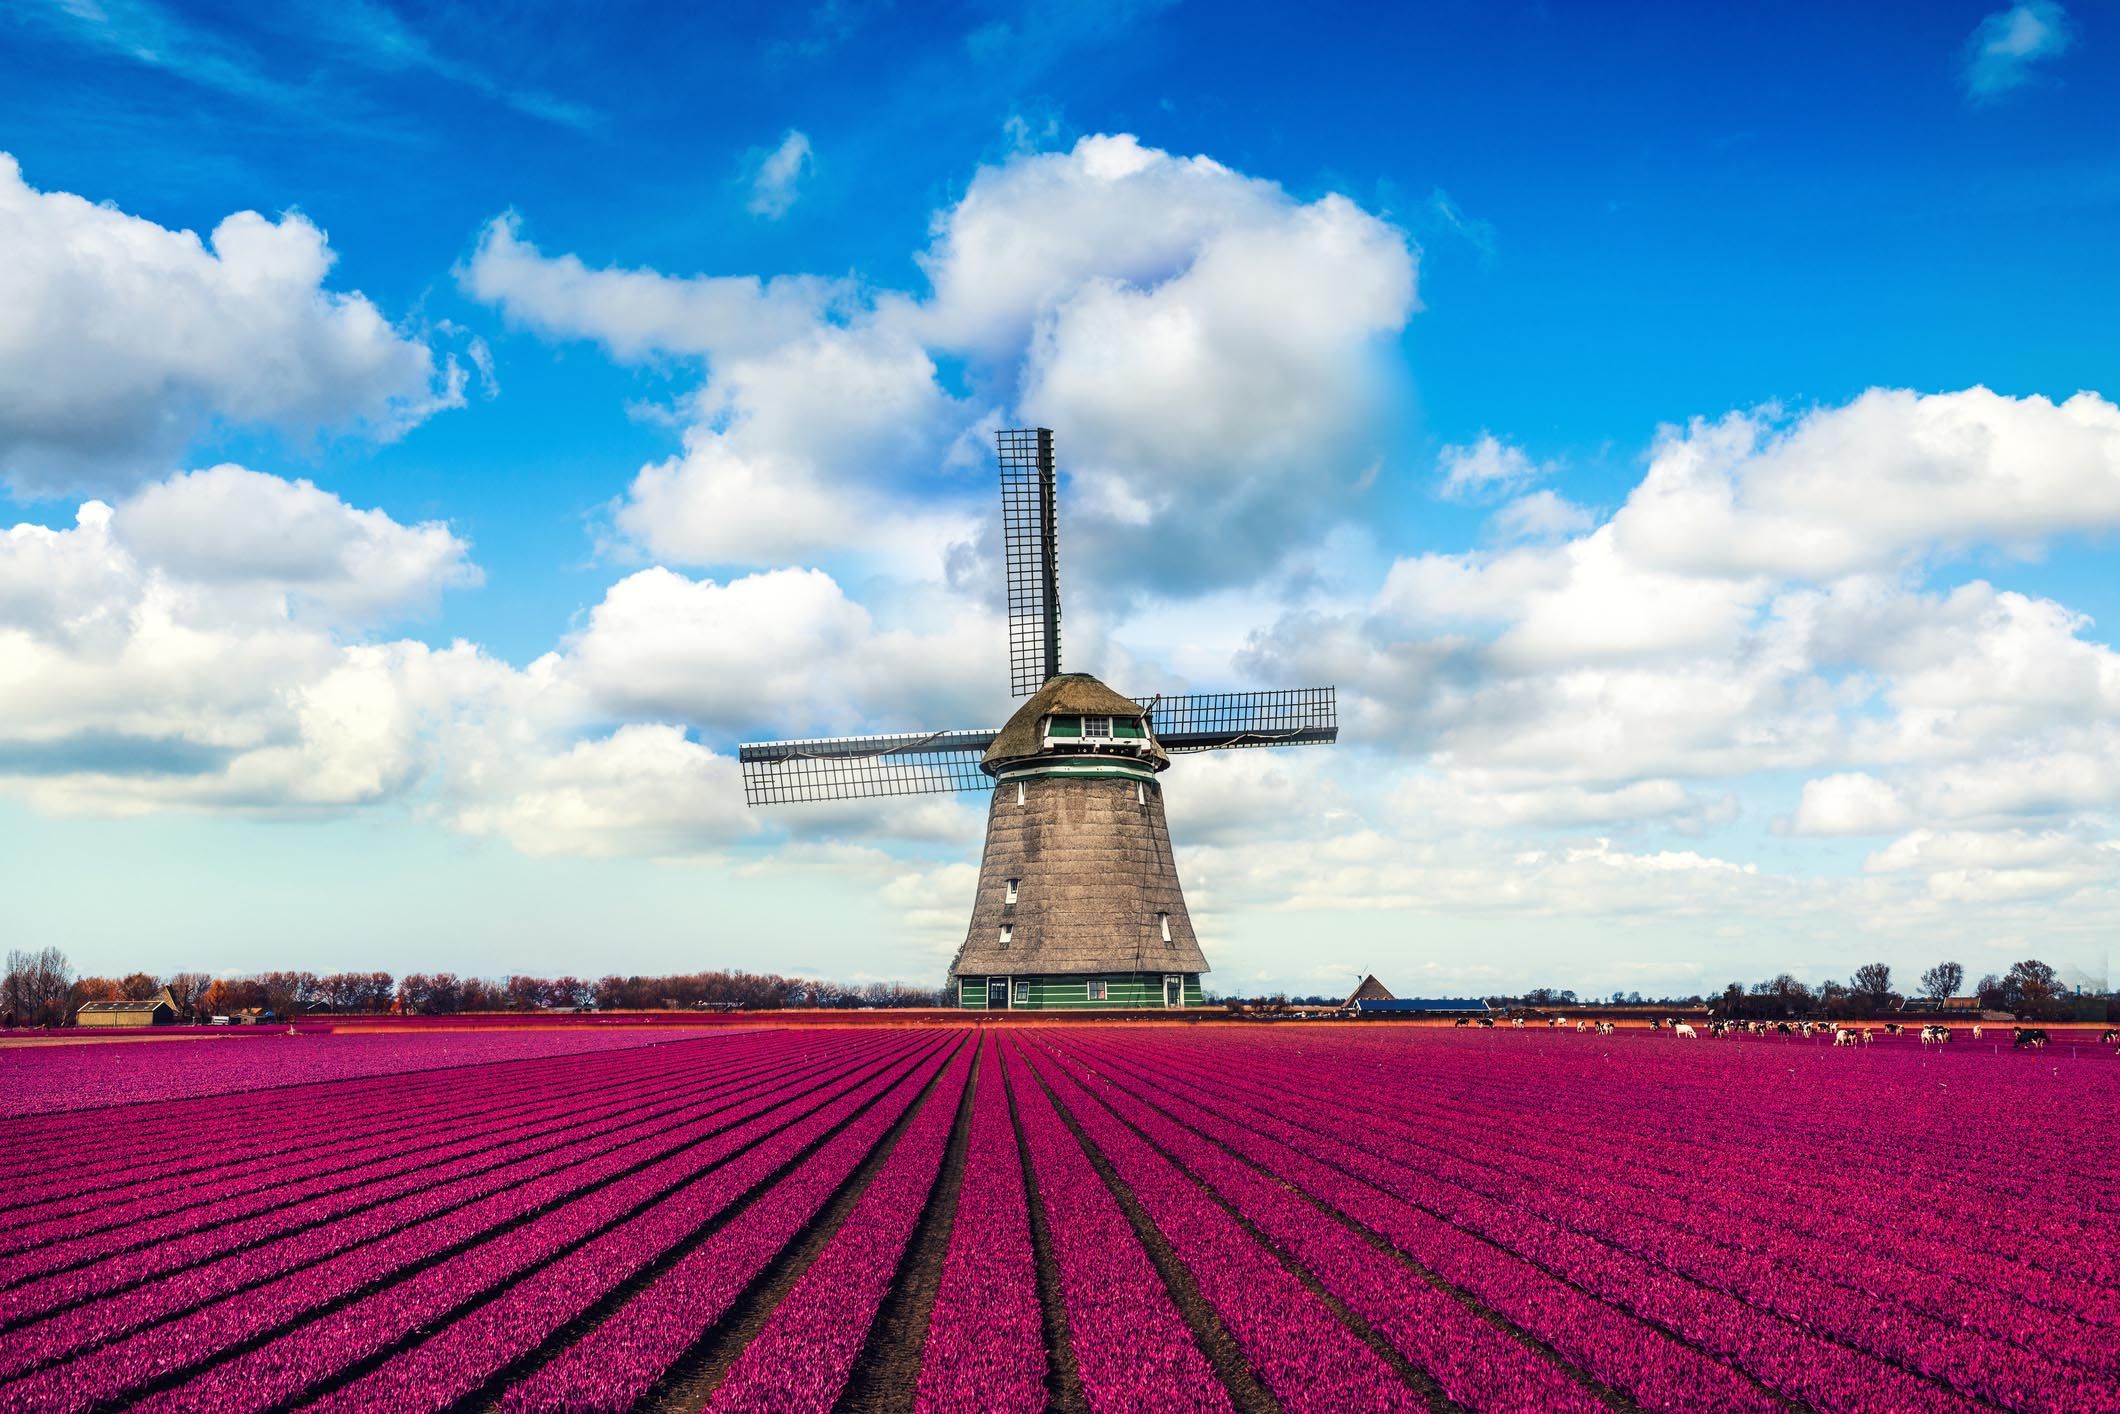 Tulip Fields in Europe - Beautiful Photos of Tulip Fields